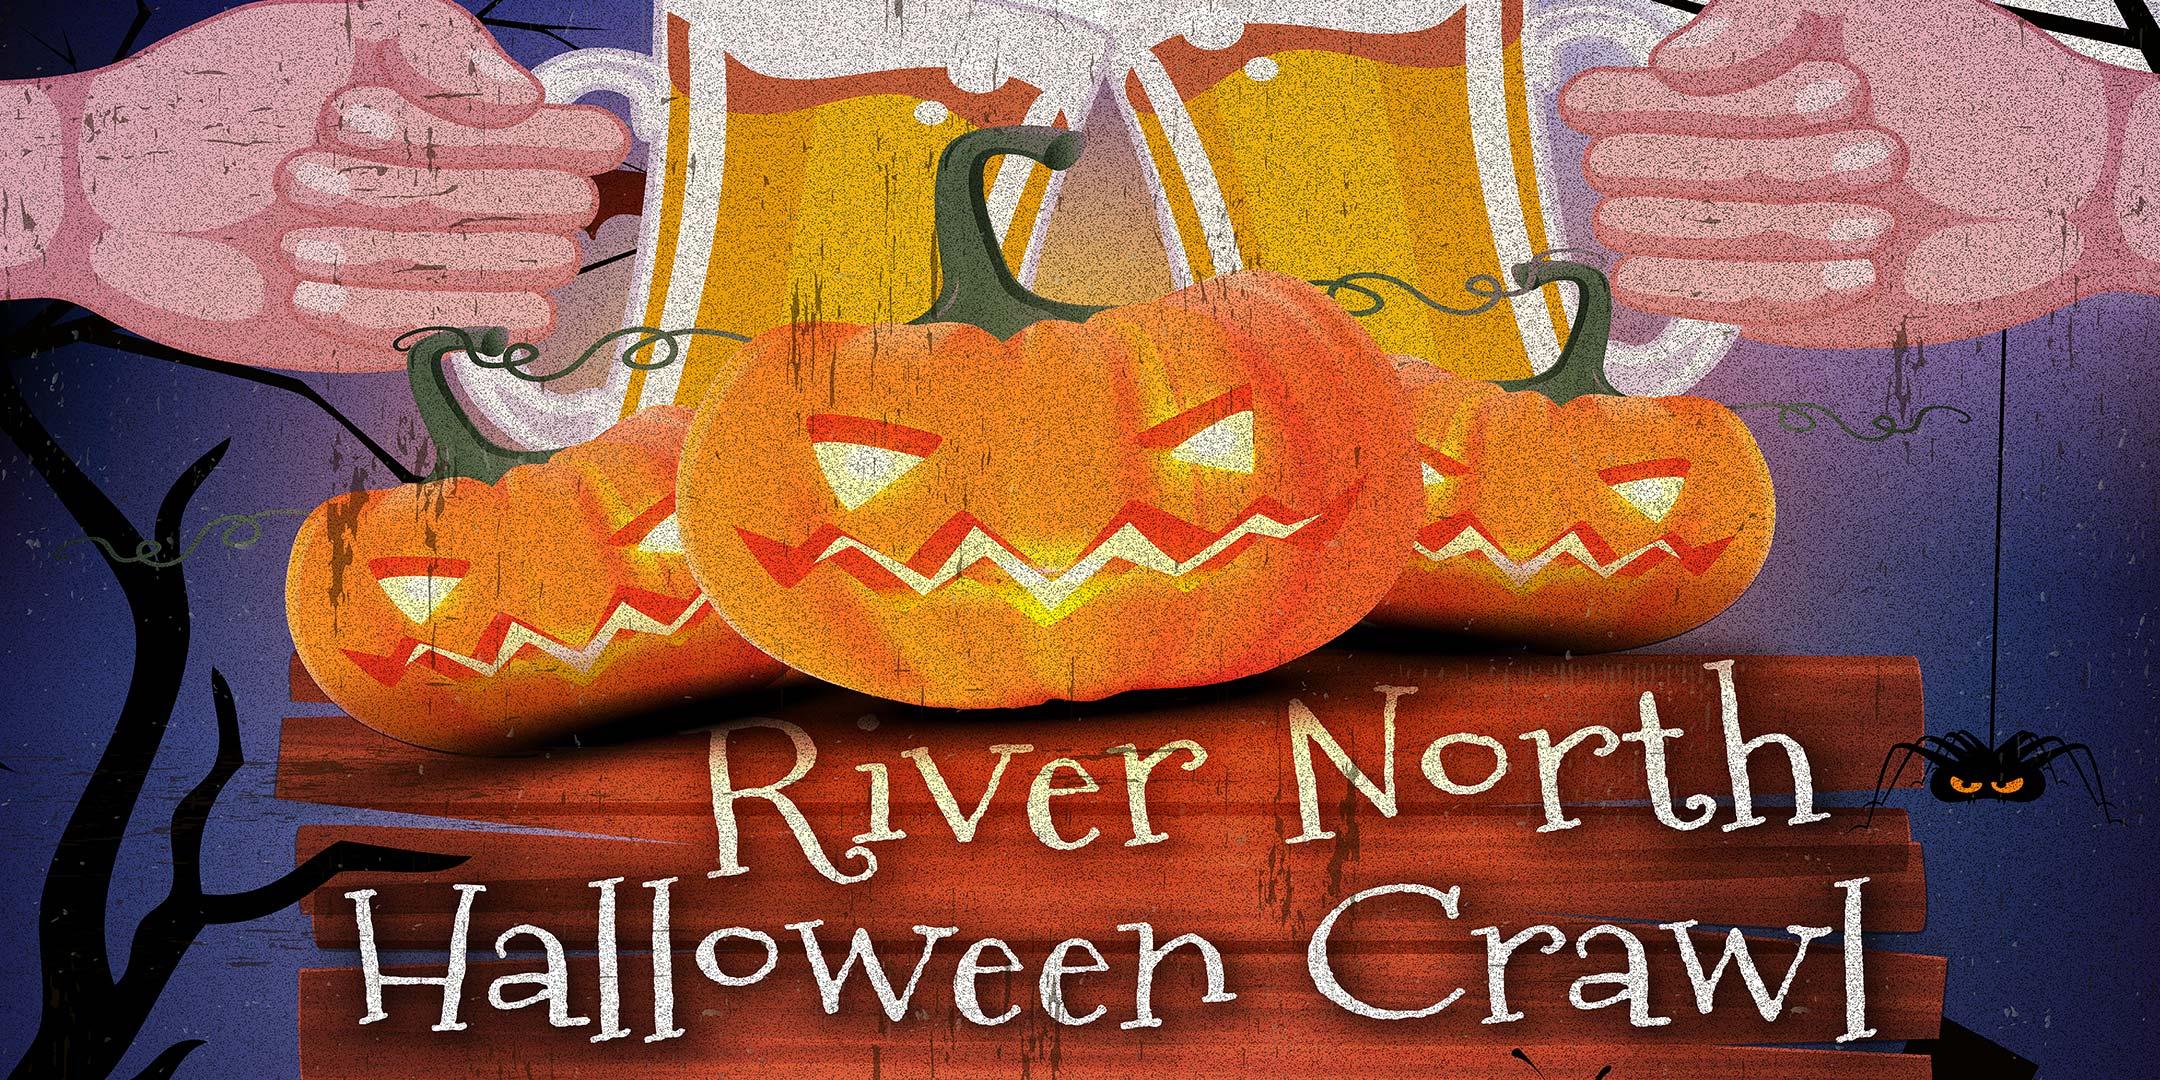 River North Halloween Crawl - Chicago's BEST Halloween Crawl!